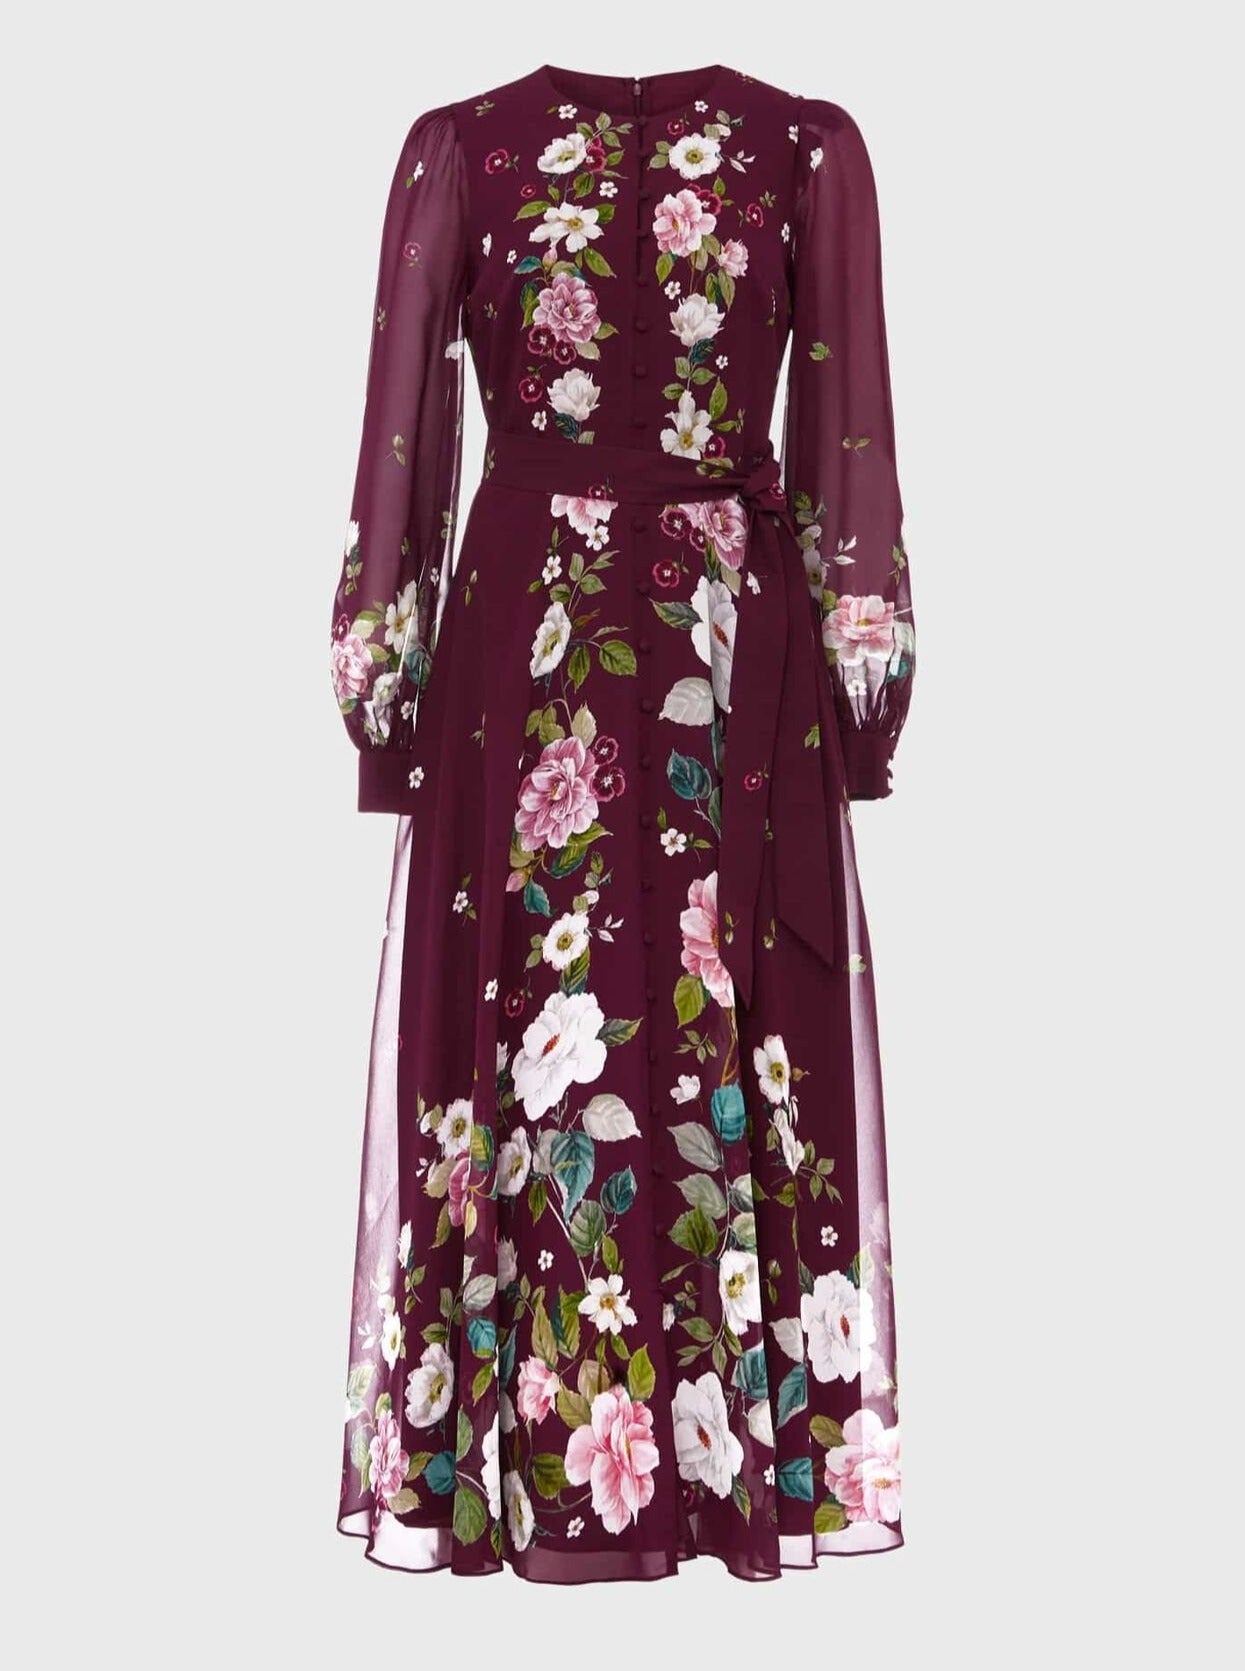 The Floral Silk Dress